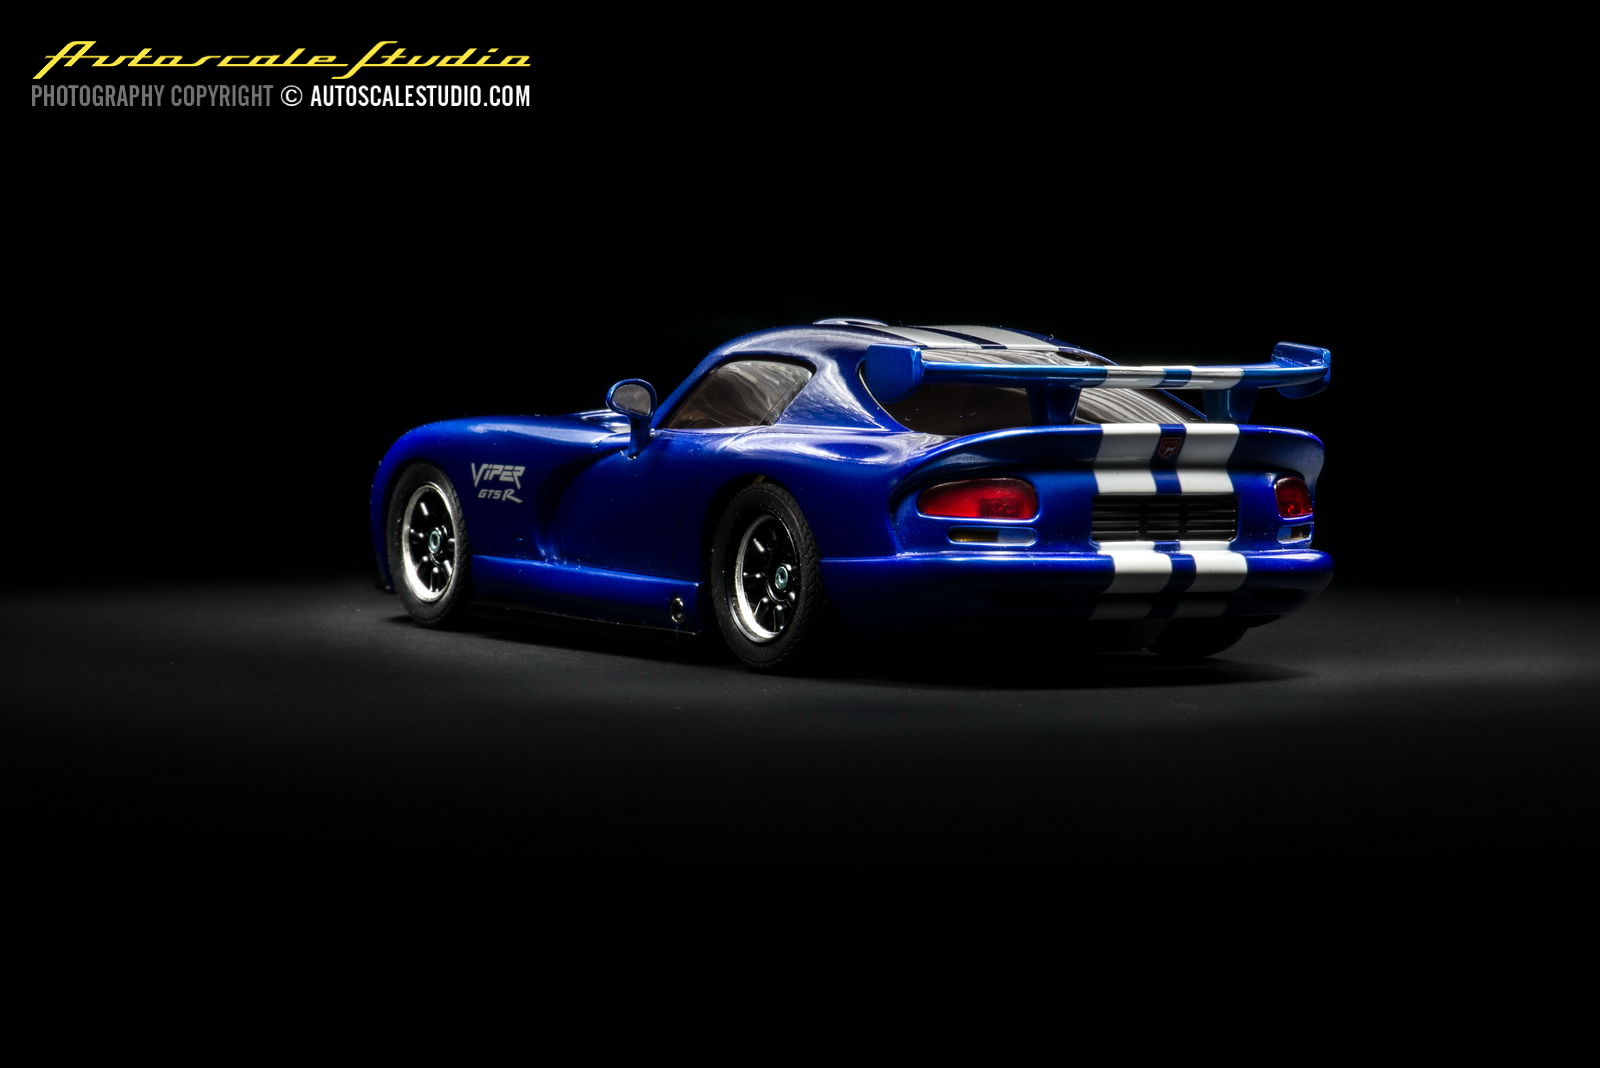 Chrysler viper gts blue #2